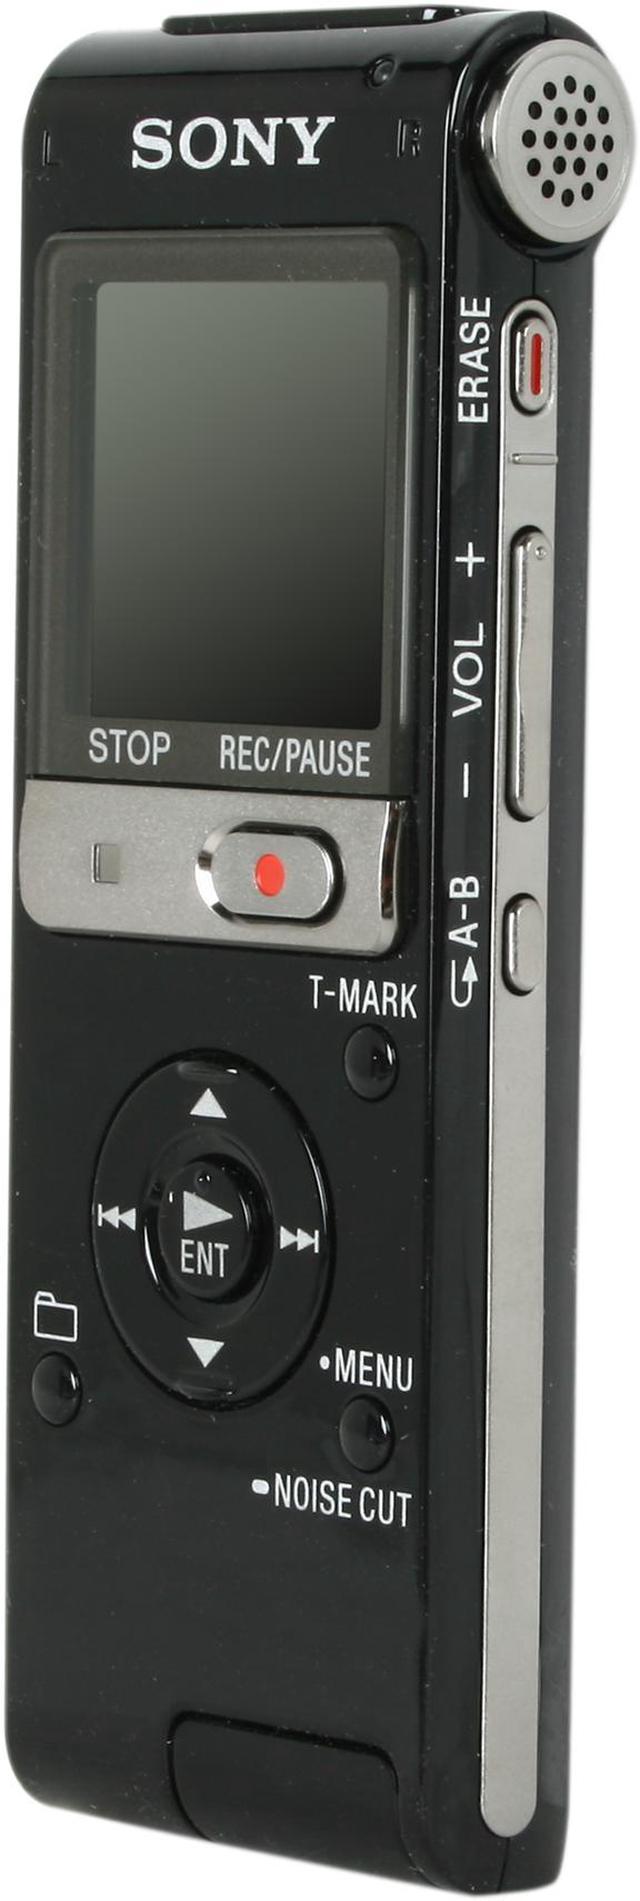 Sony ICD-UX512 2GB Flash Memory Digital Voice Recorder (Black